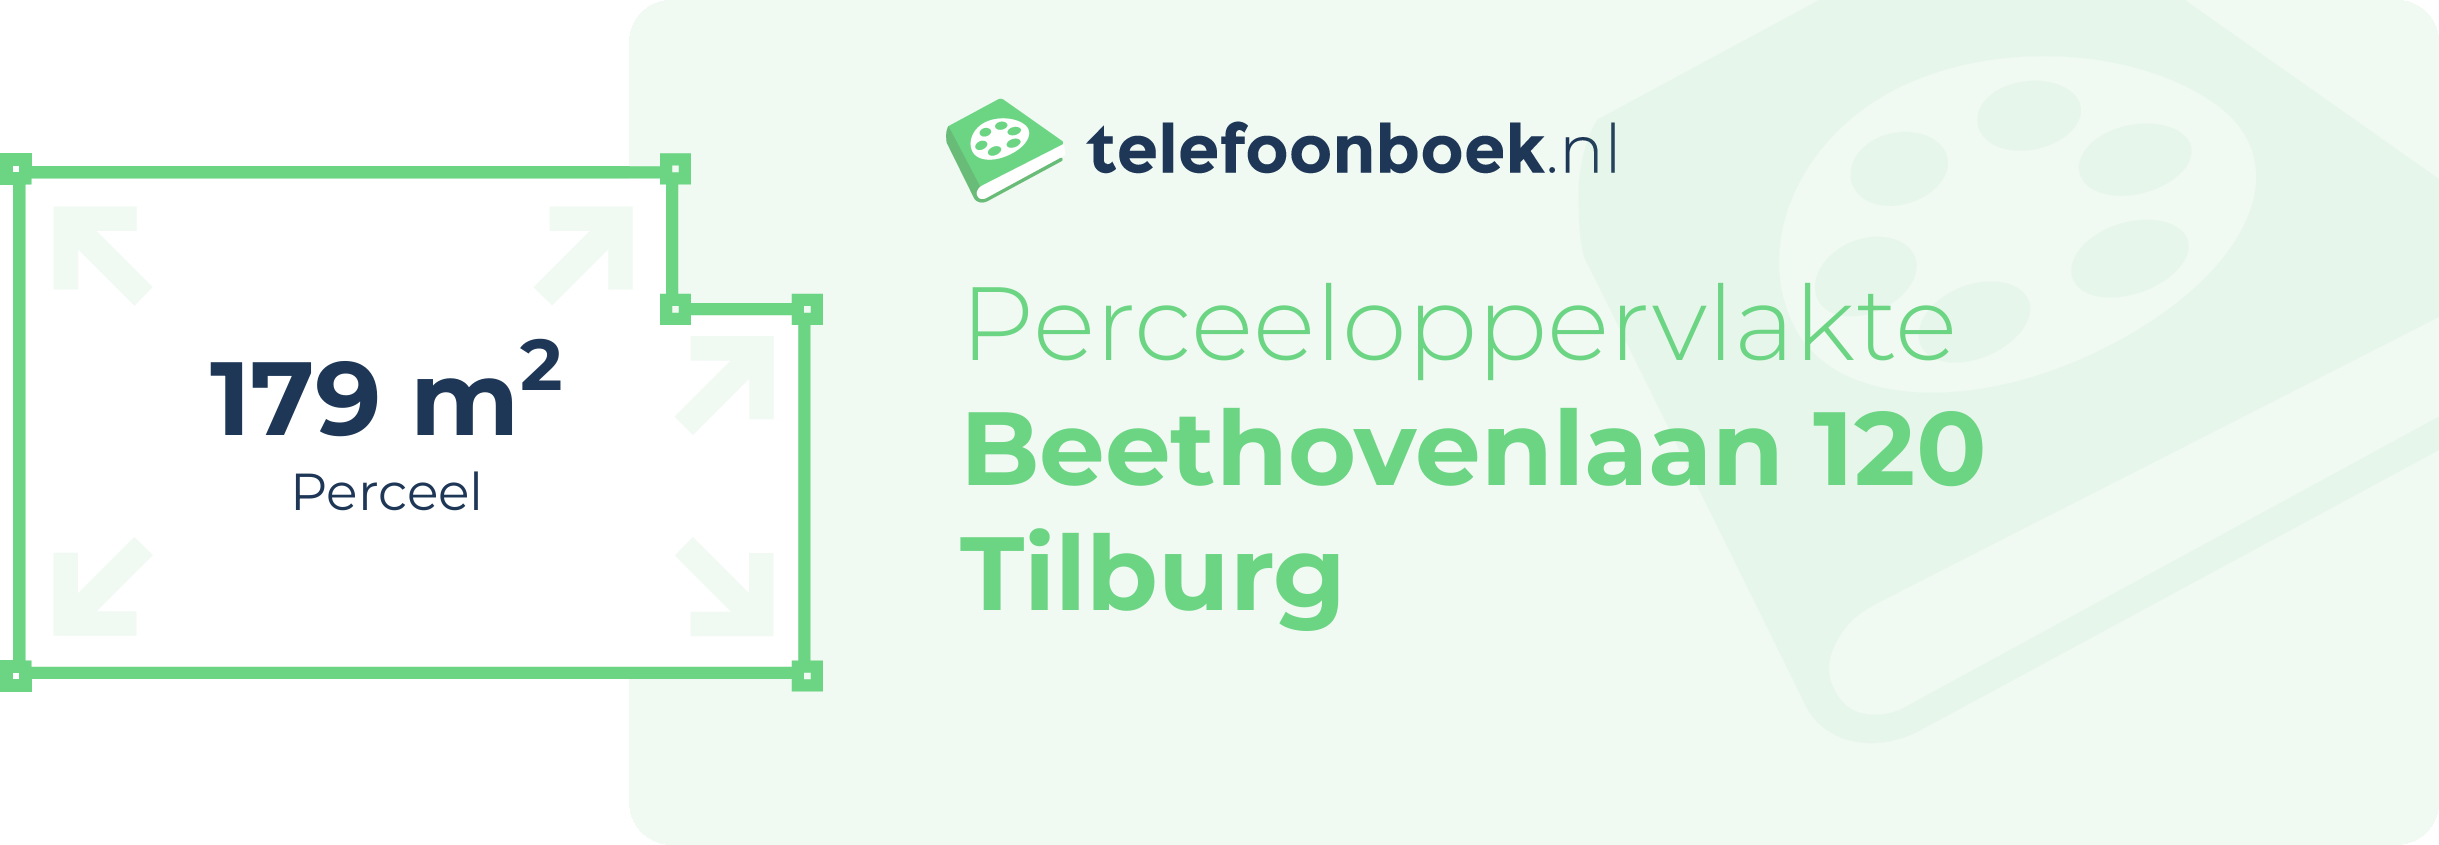 Perceeloppervlakte Beethovenlaan 120 Tilburg